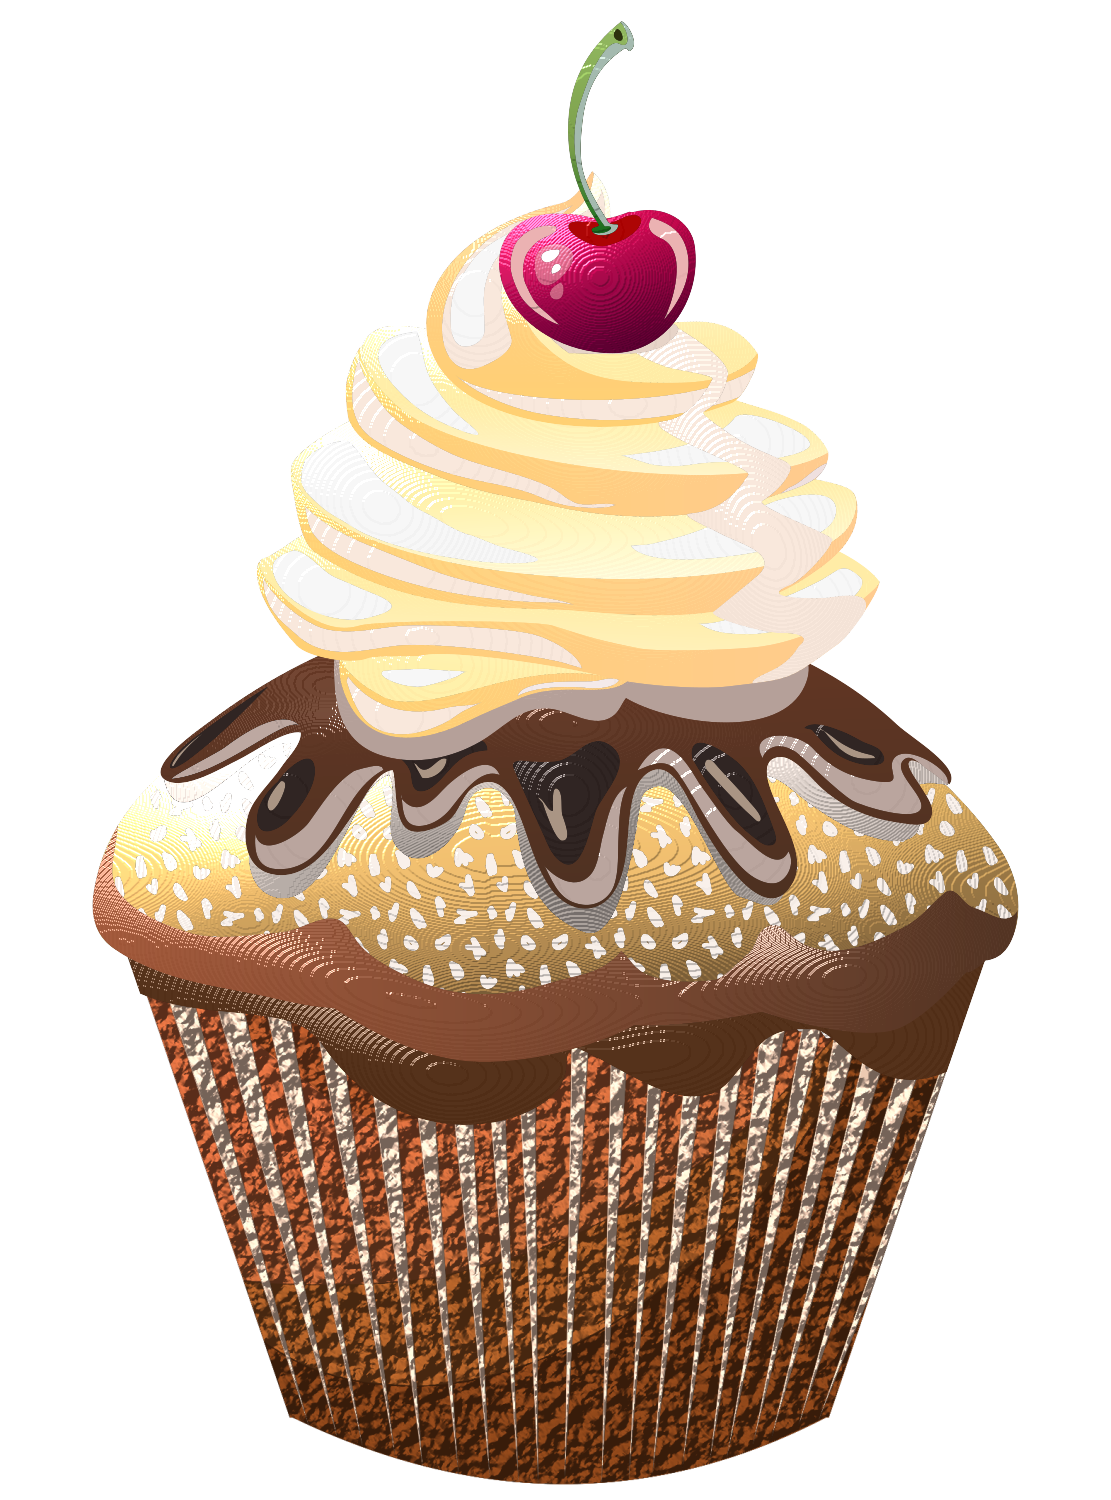  cupcake cupcakes pinterest. Muffins clipart bake sale item